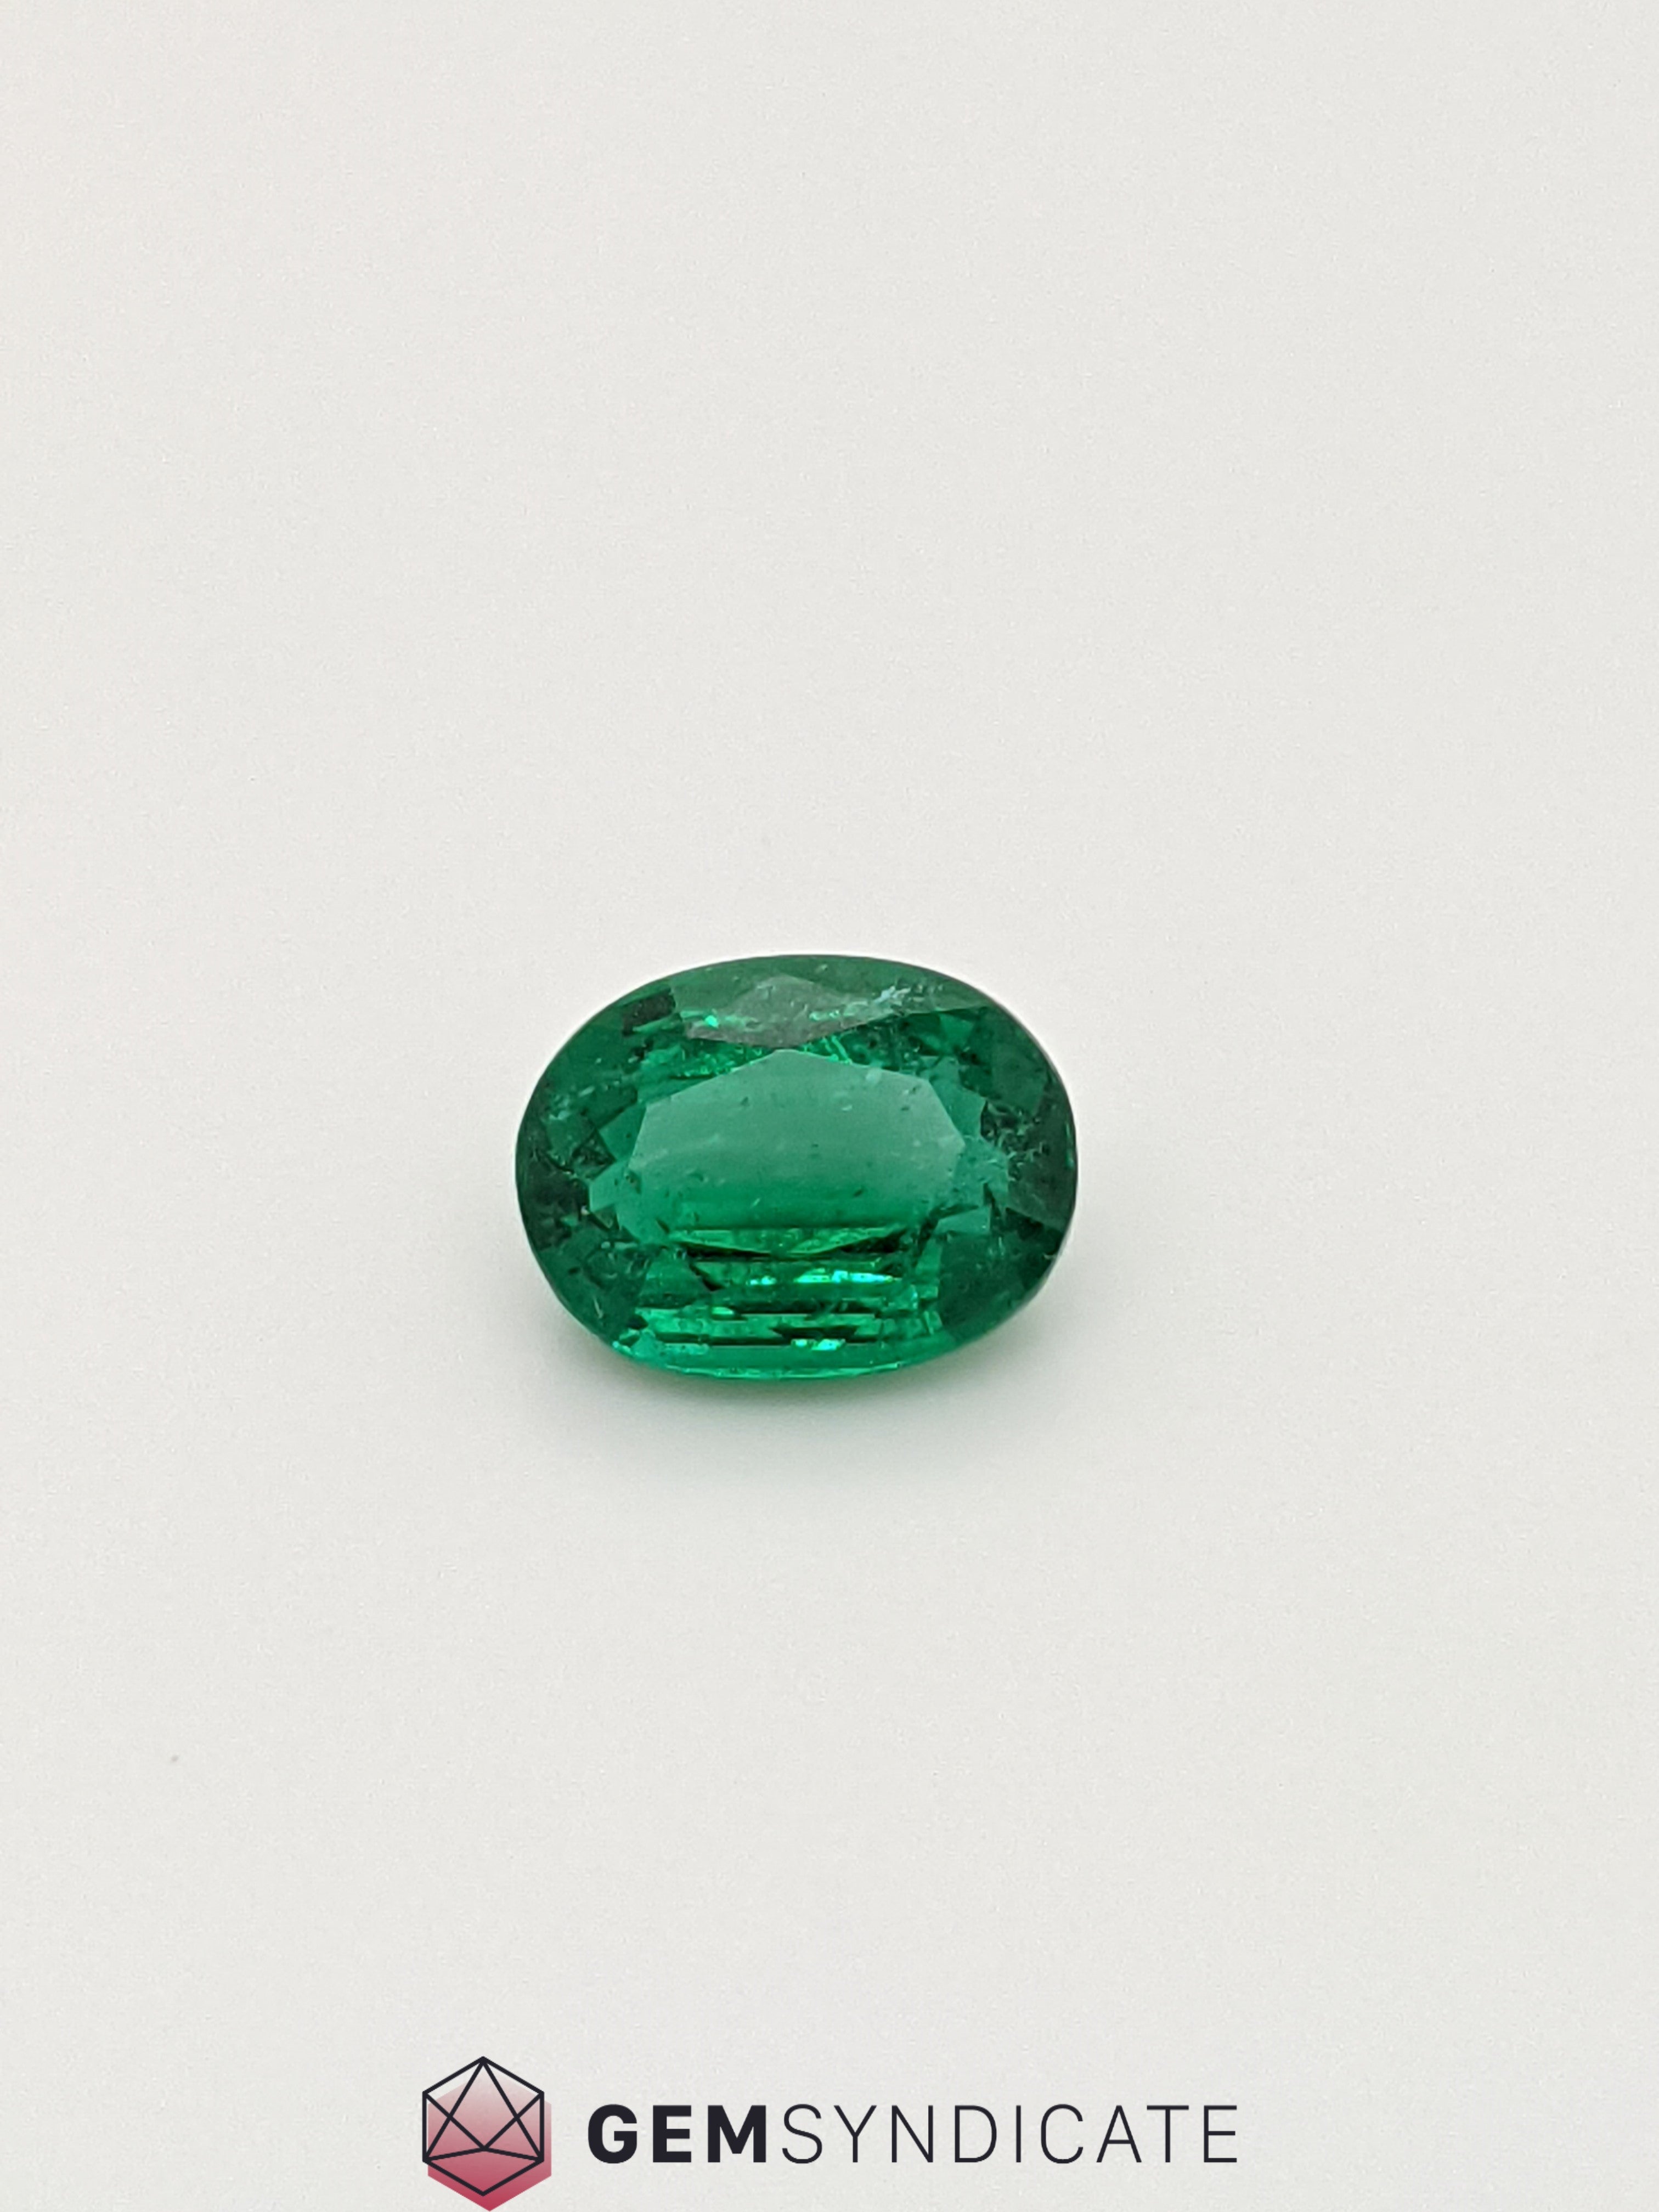 Enchanting Oval Green Emerald 1.38ct